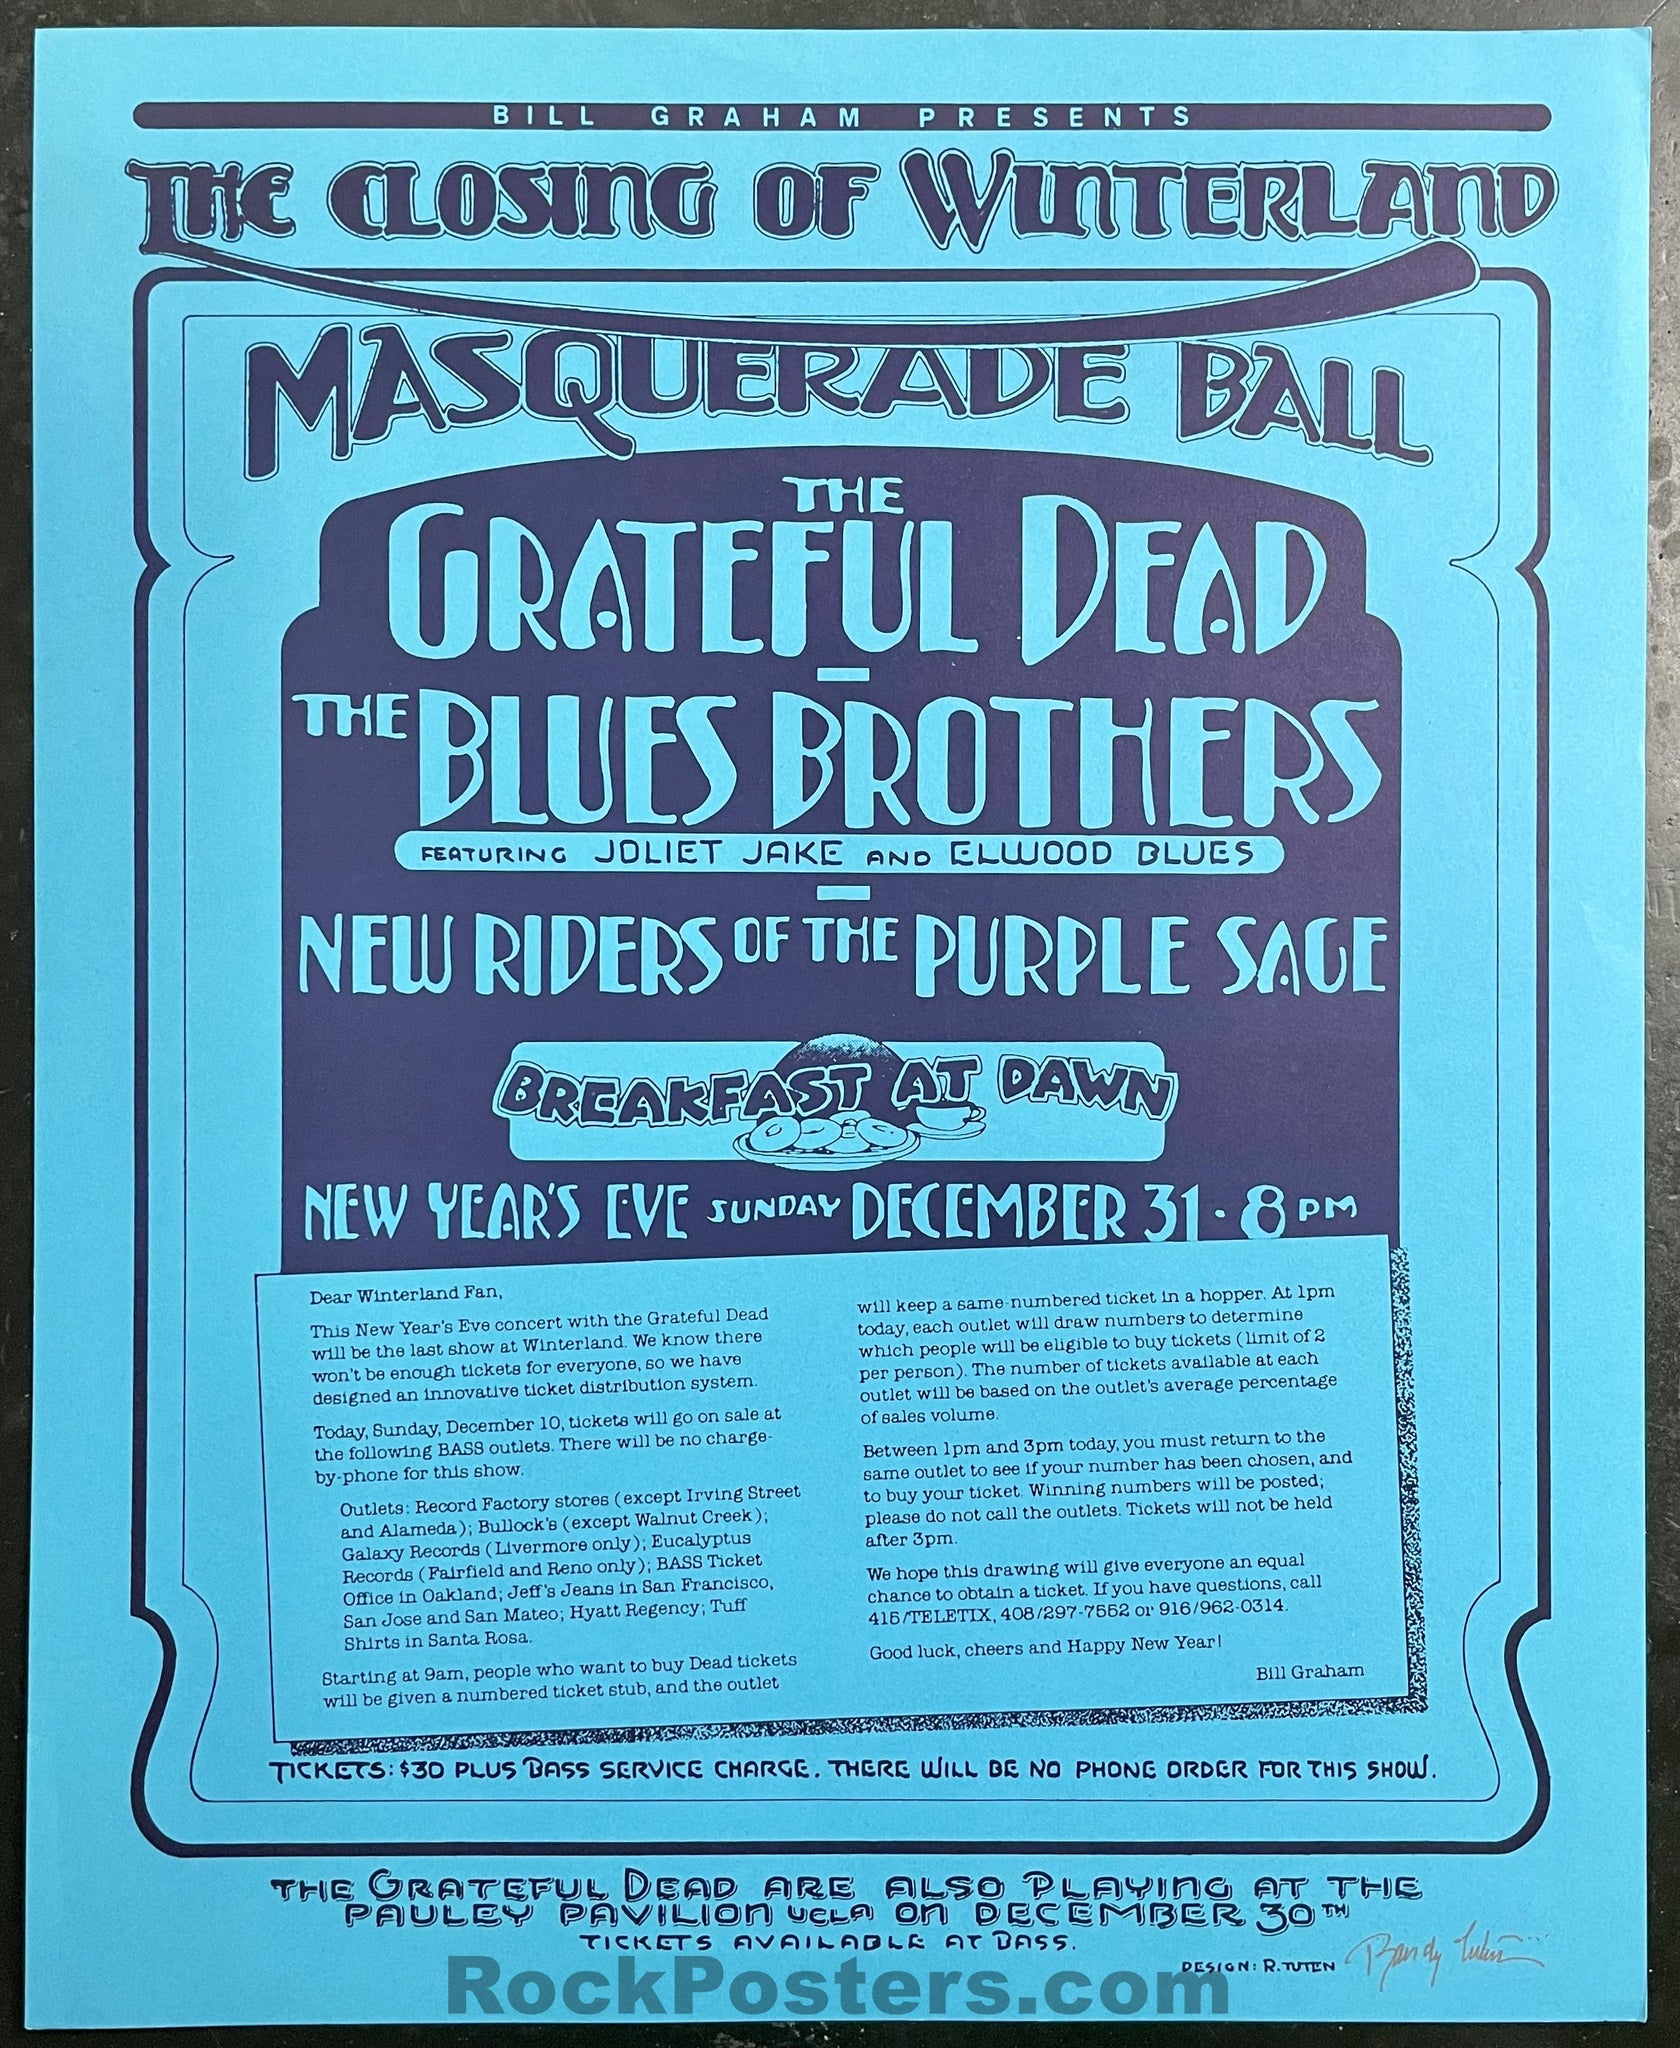 AUCTION - AOR 4.38 Alt. - Grateful Dead Blues Brothers - Randy Tuten Signed - 1978 Poster - Winterland - Excellent